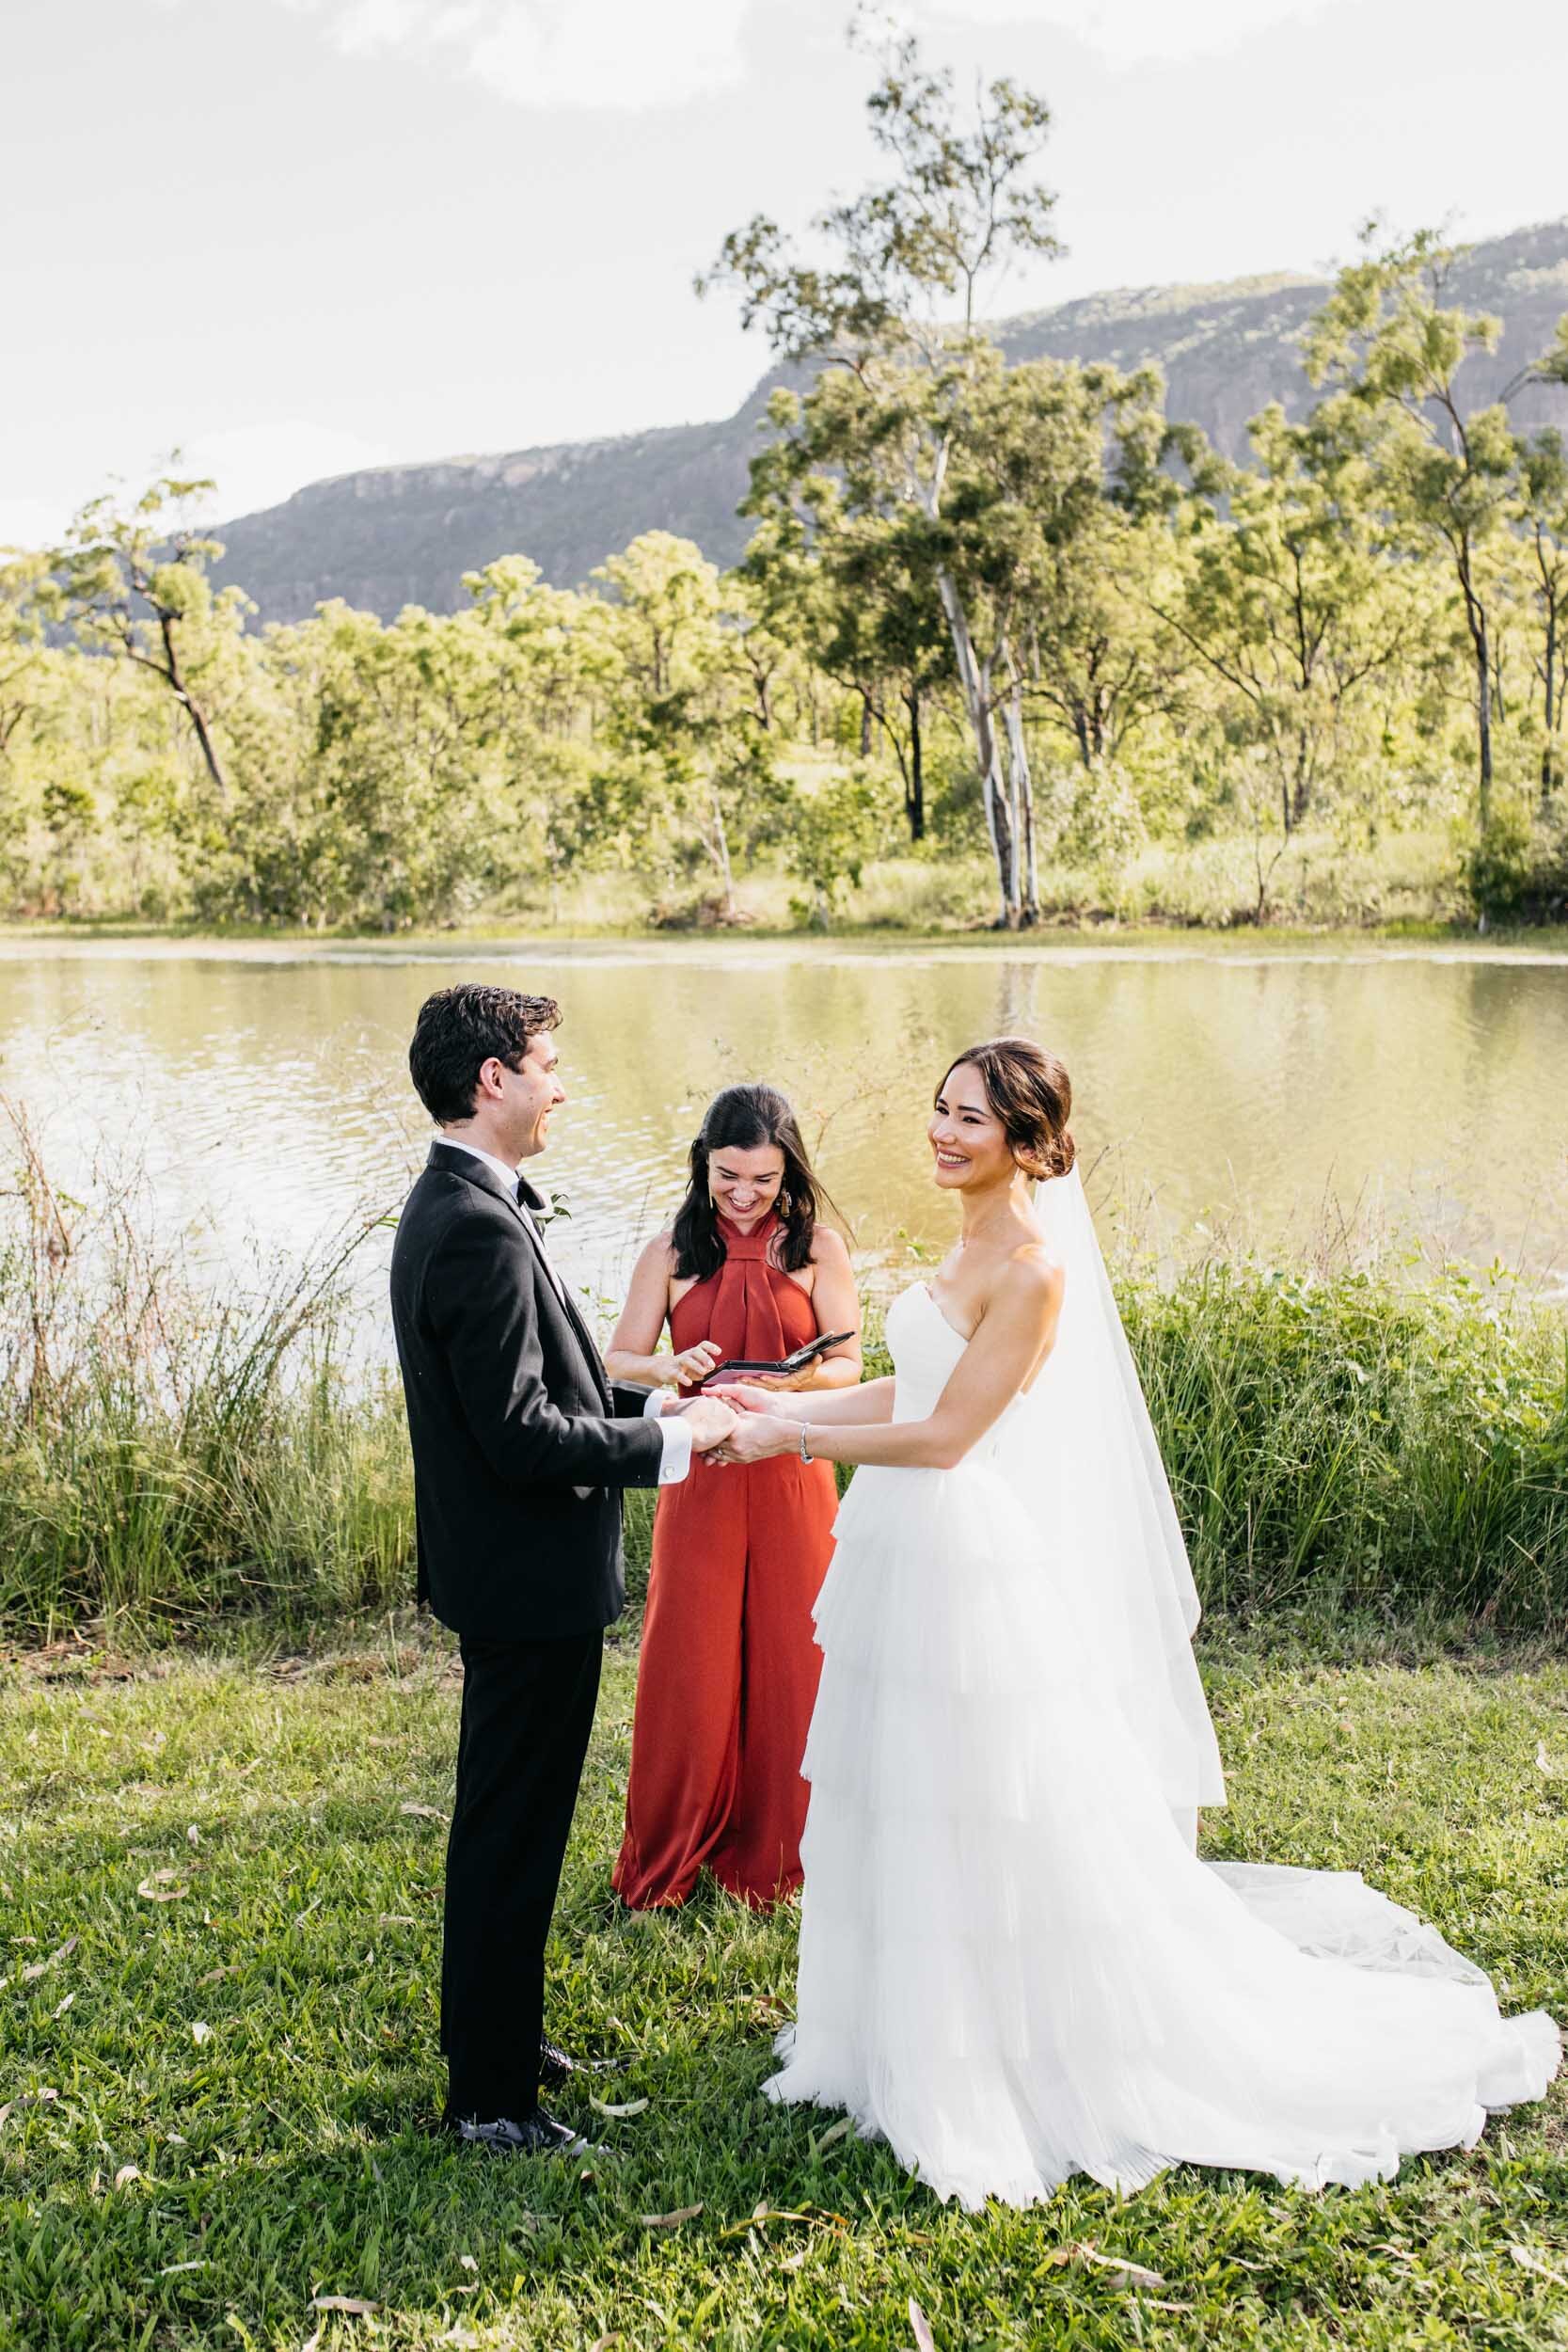 The Raw Photographer - Cairns Wedding Photographer - Mount Mulligan Lodge - Luxury Elopement Destination-60.jpg